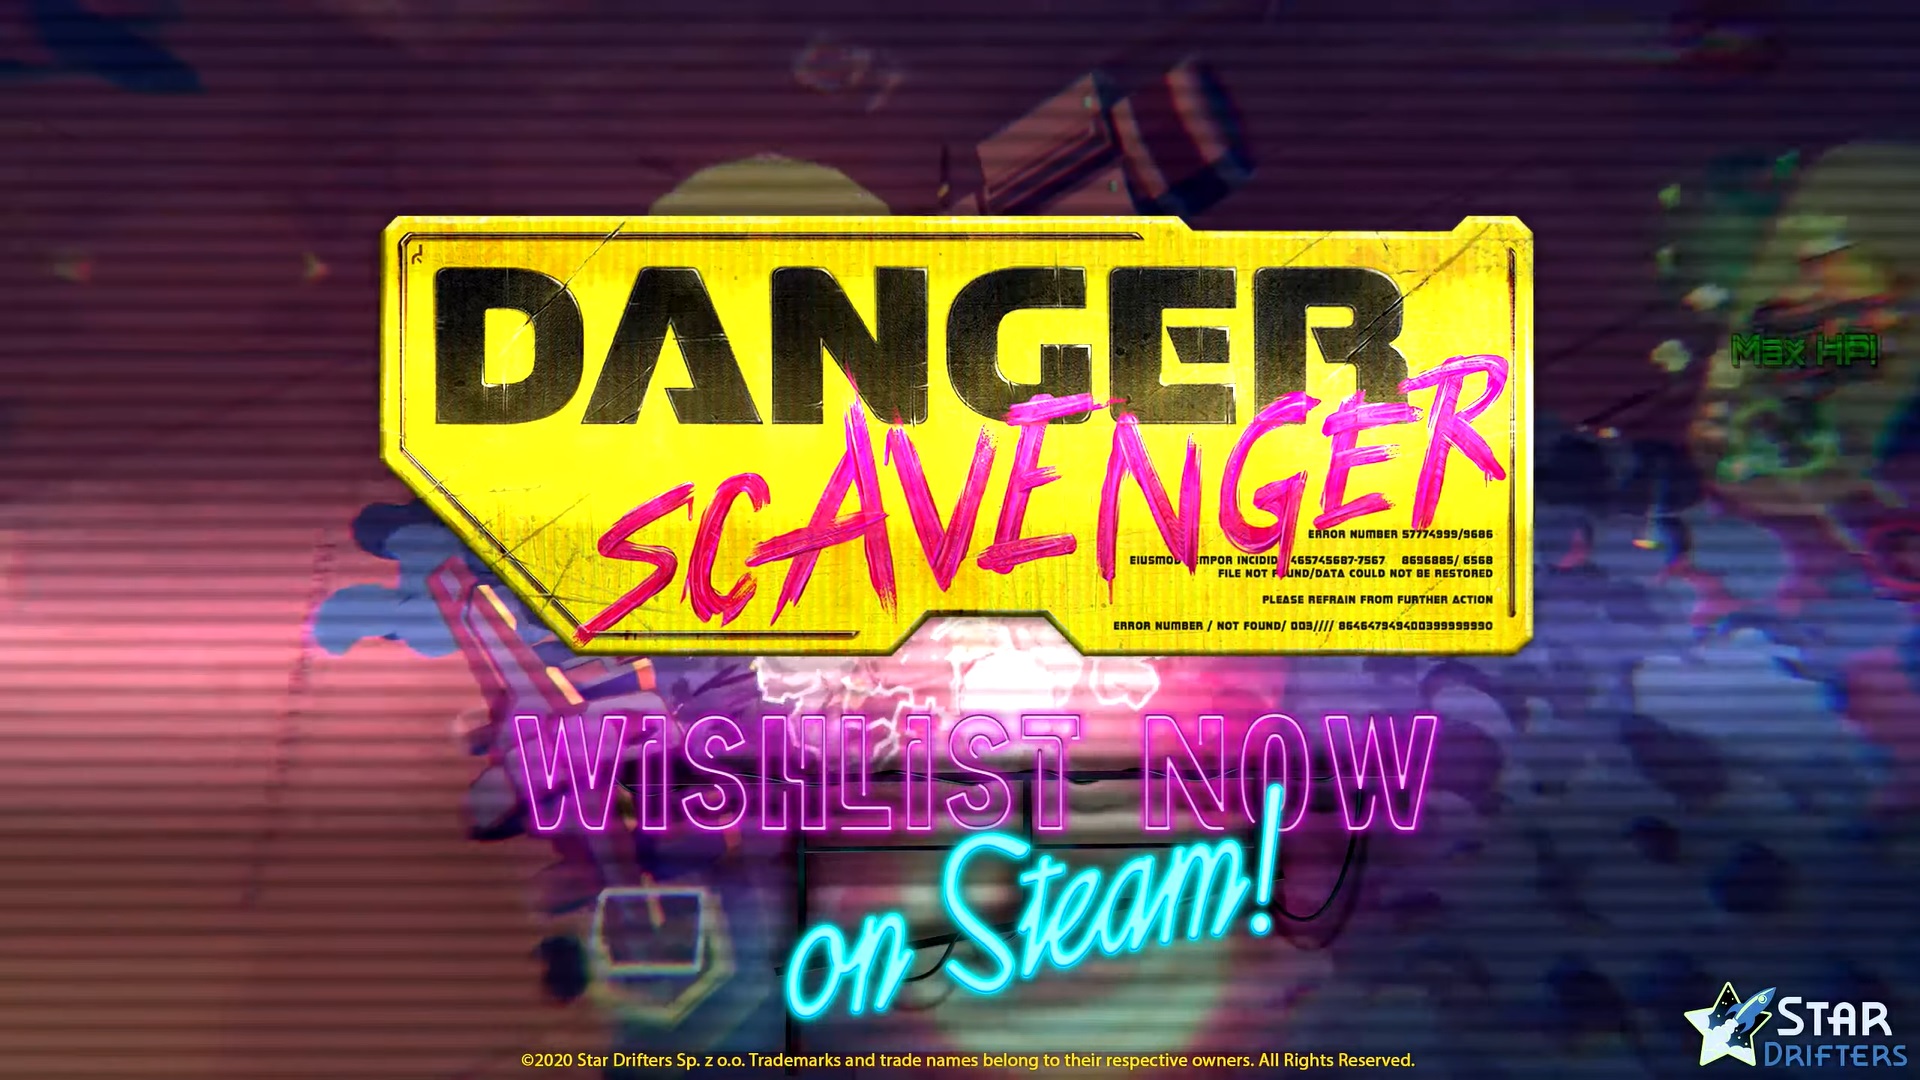 download the new version for mac Danger Scavenger